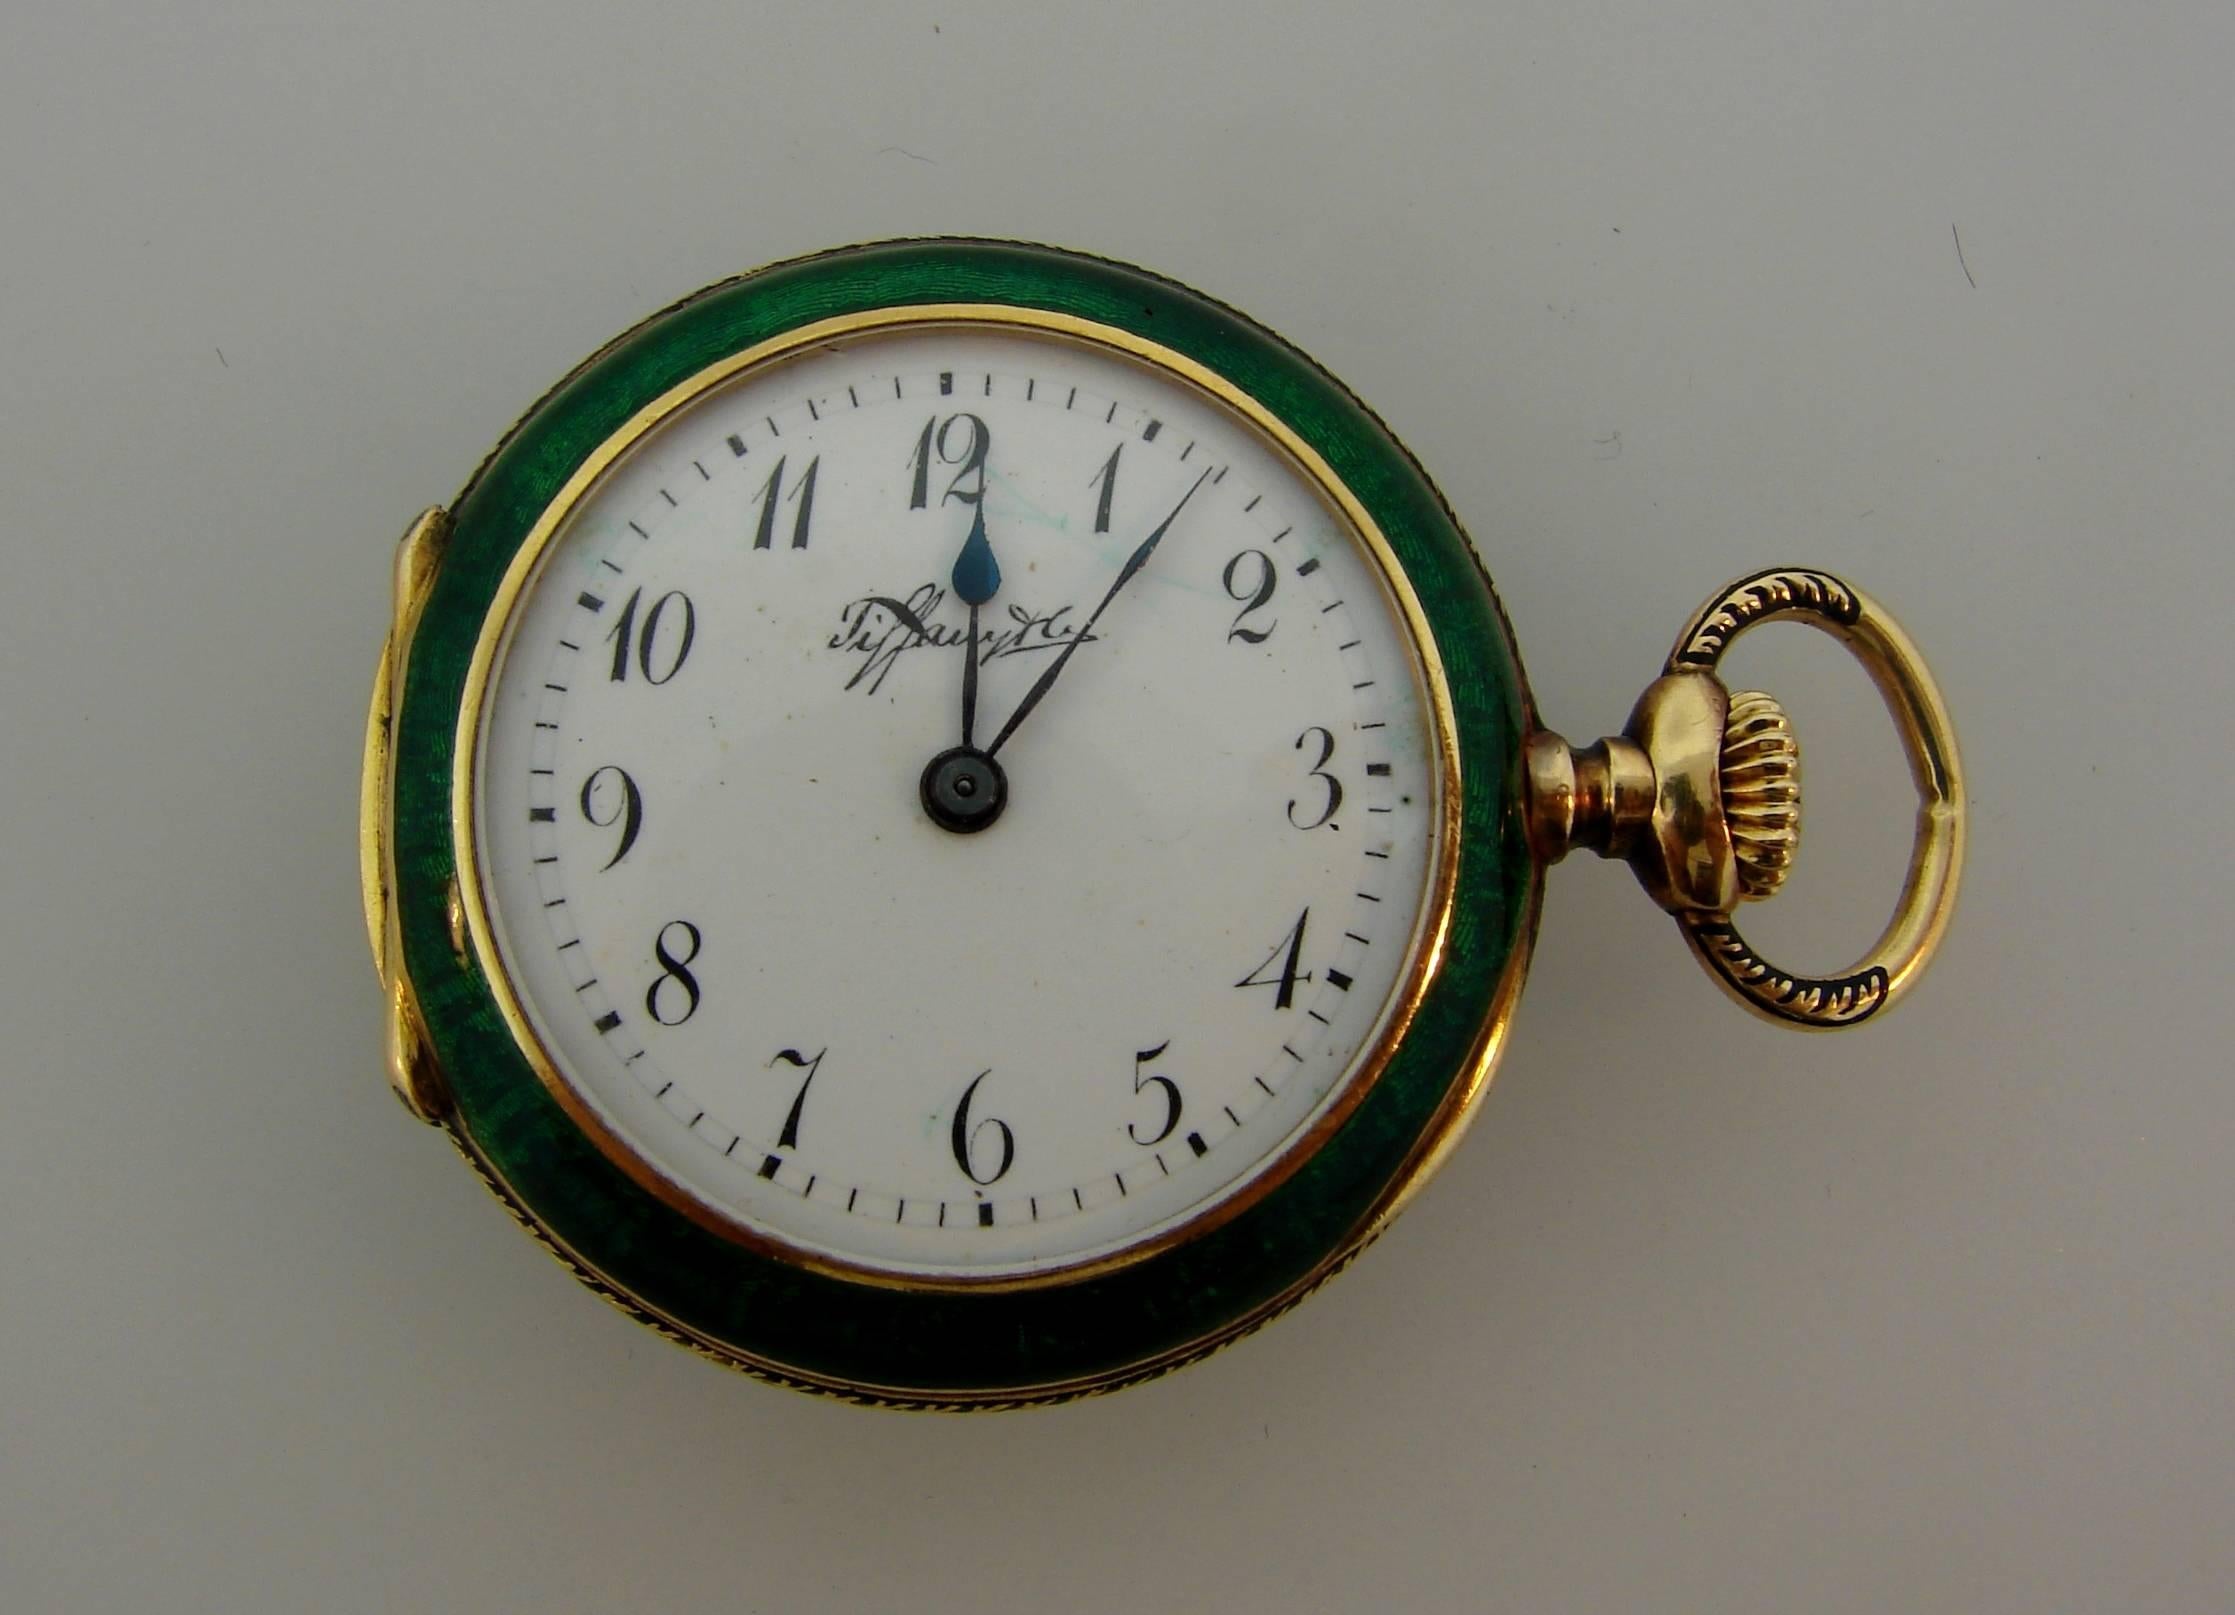 vintage tiffany pocket watch